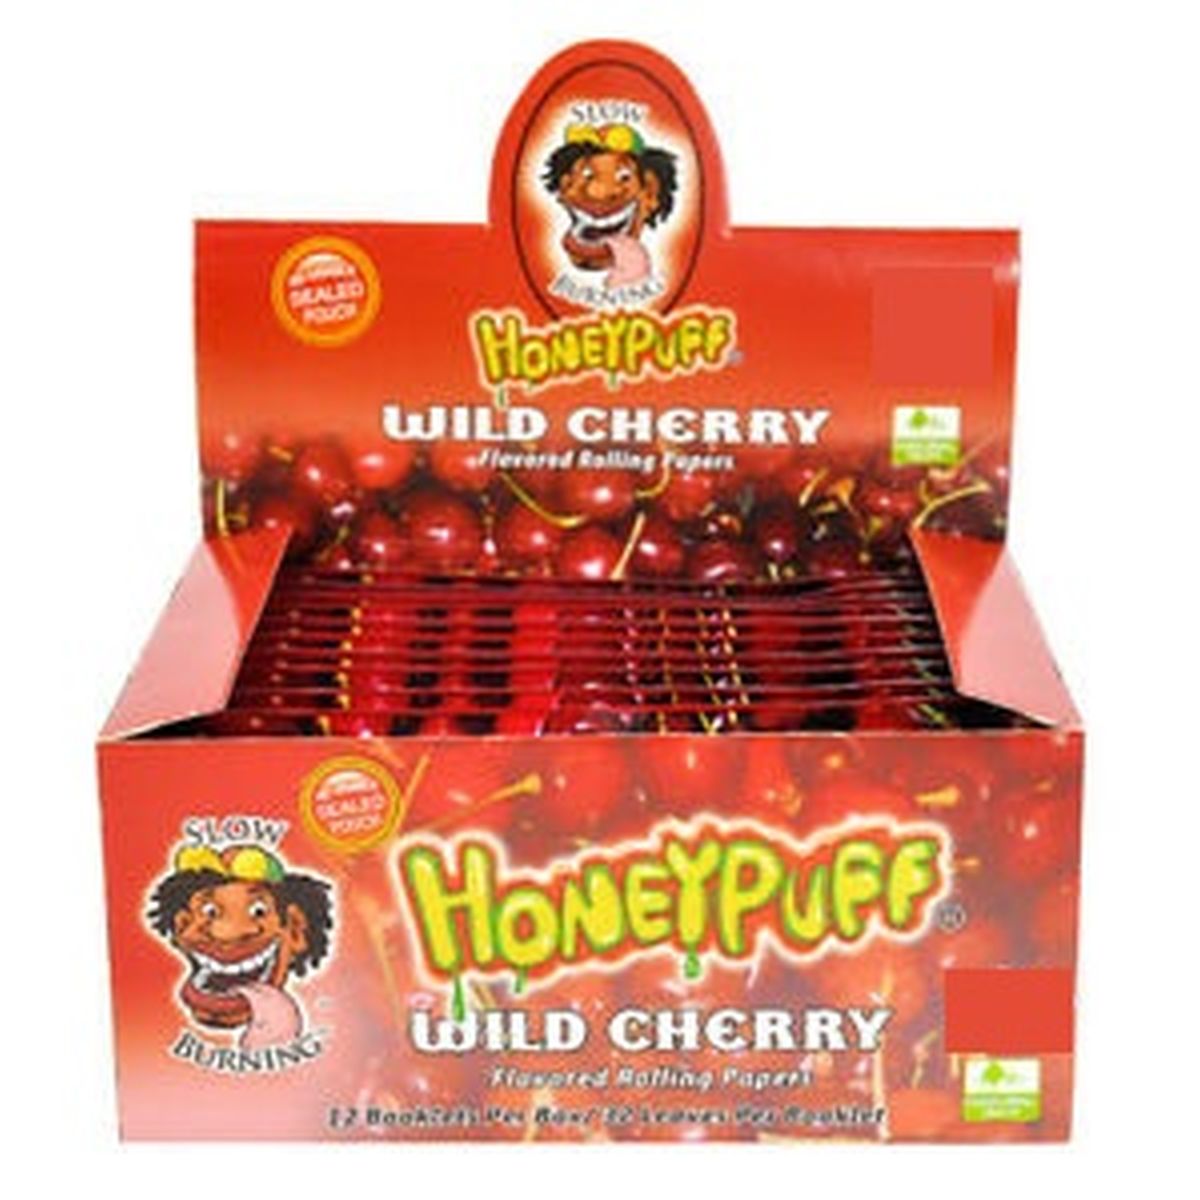 Honeypuff Drehpapier Honeypuff KS Wild Cherry-Aroma 32 Blatt bei www.Tabakring.de kaufen